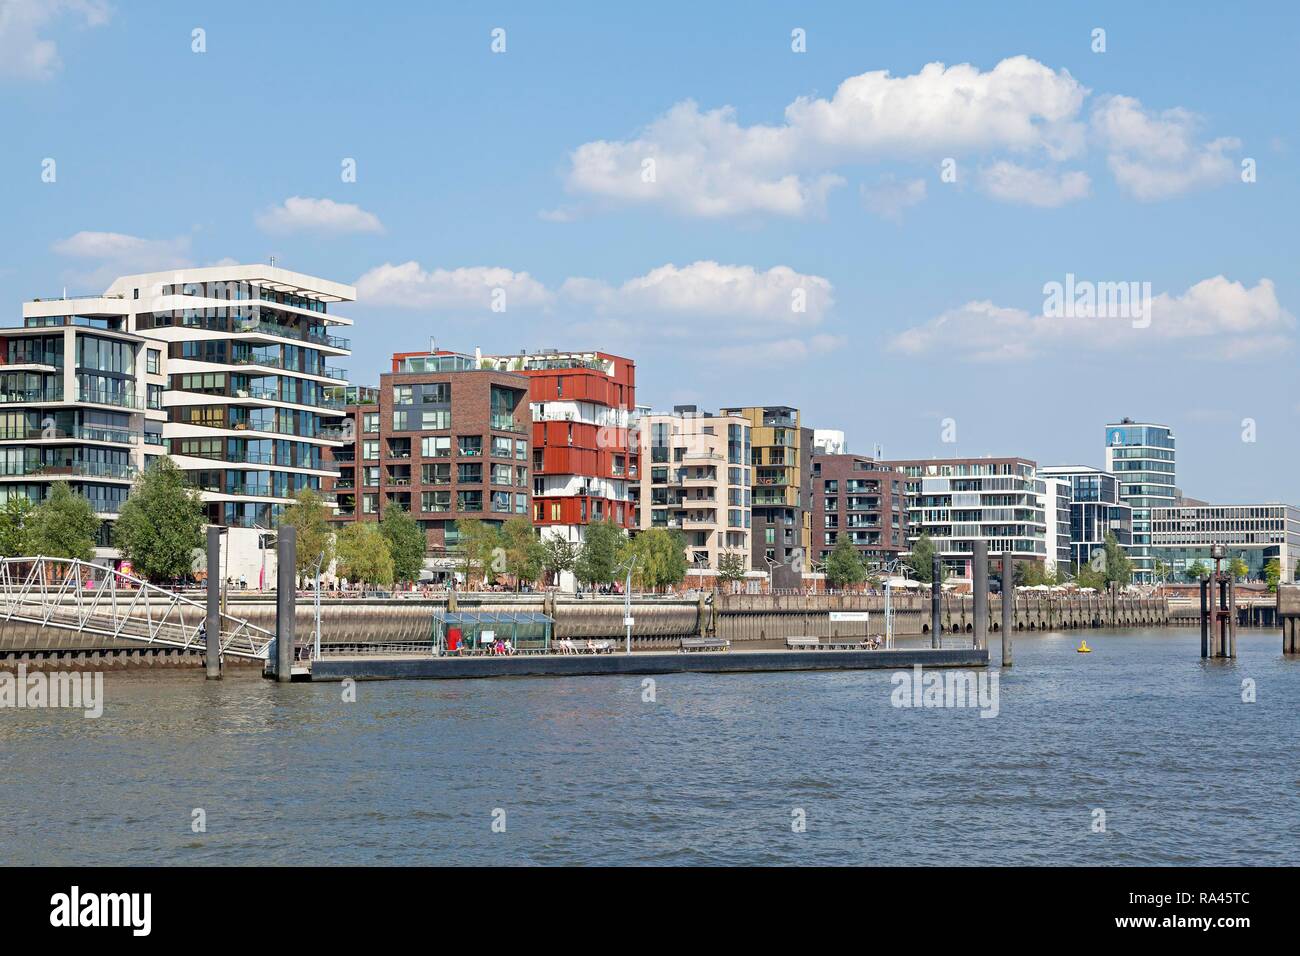 Dalmannkai HafenCity, Hamburg, Deutschland Stockfoto